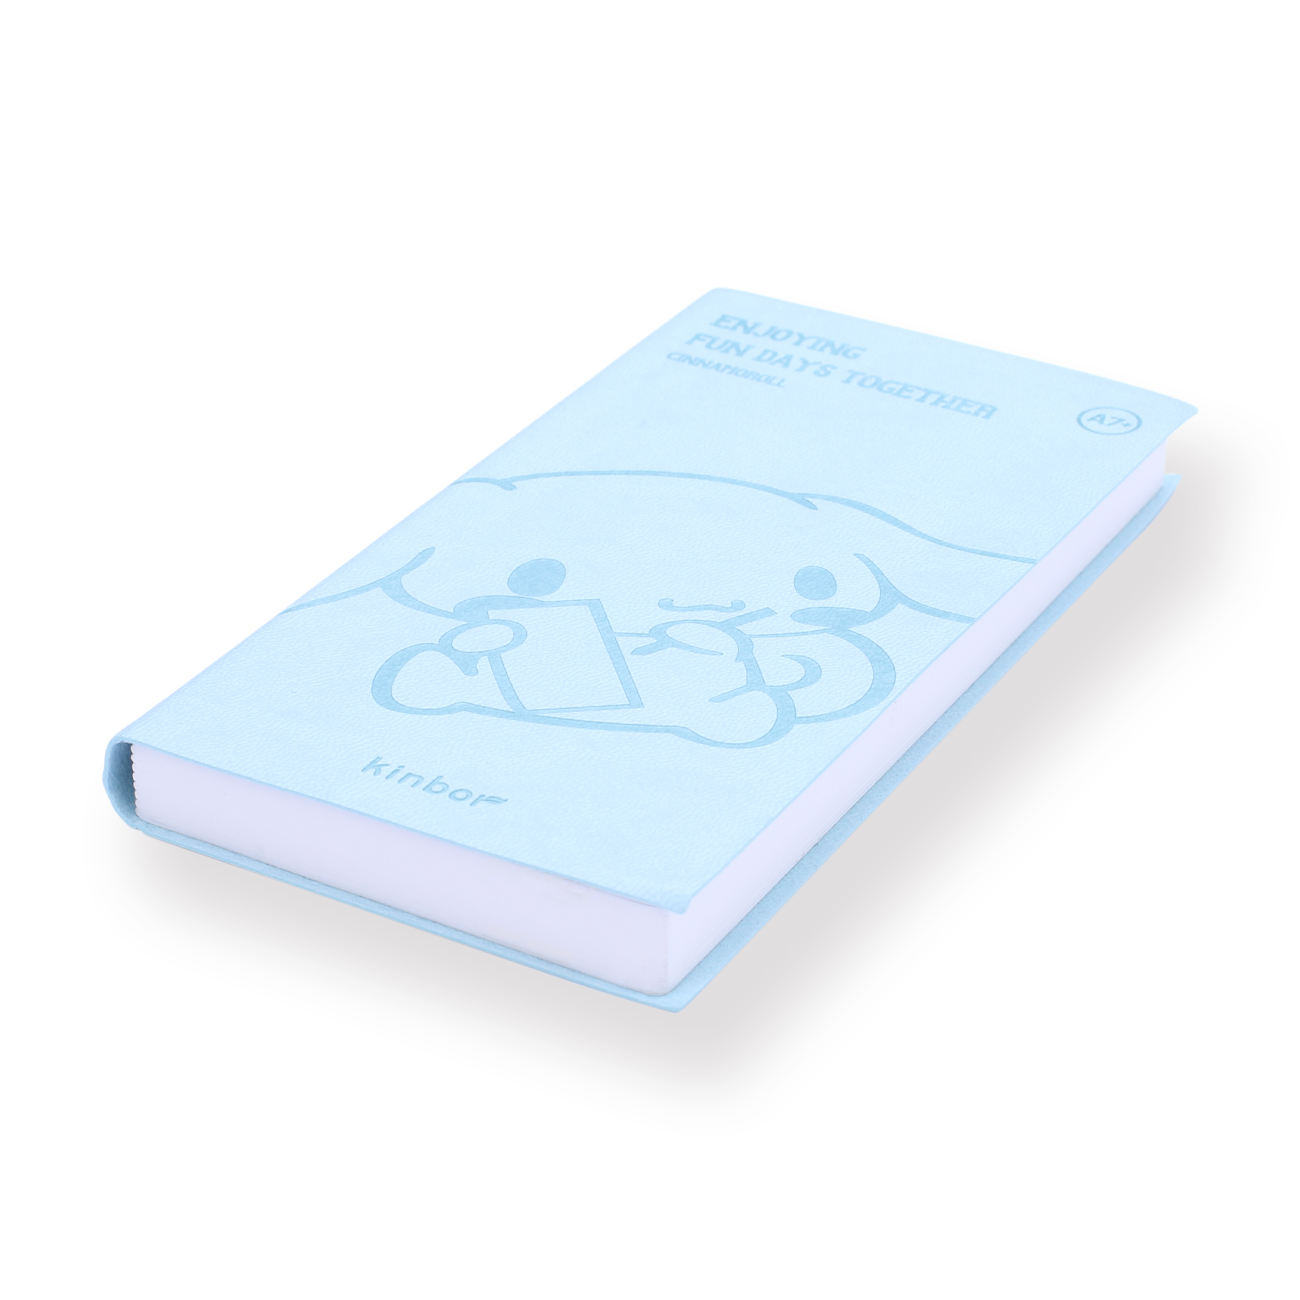 Sanrio Ring Notebook Cinnamoroll